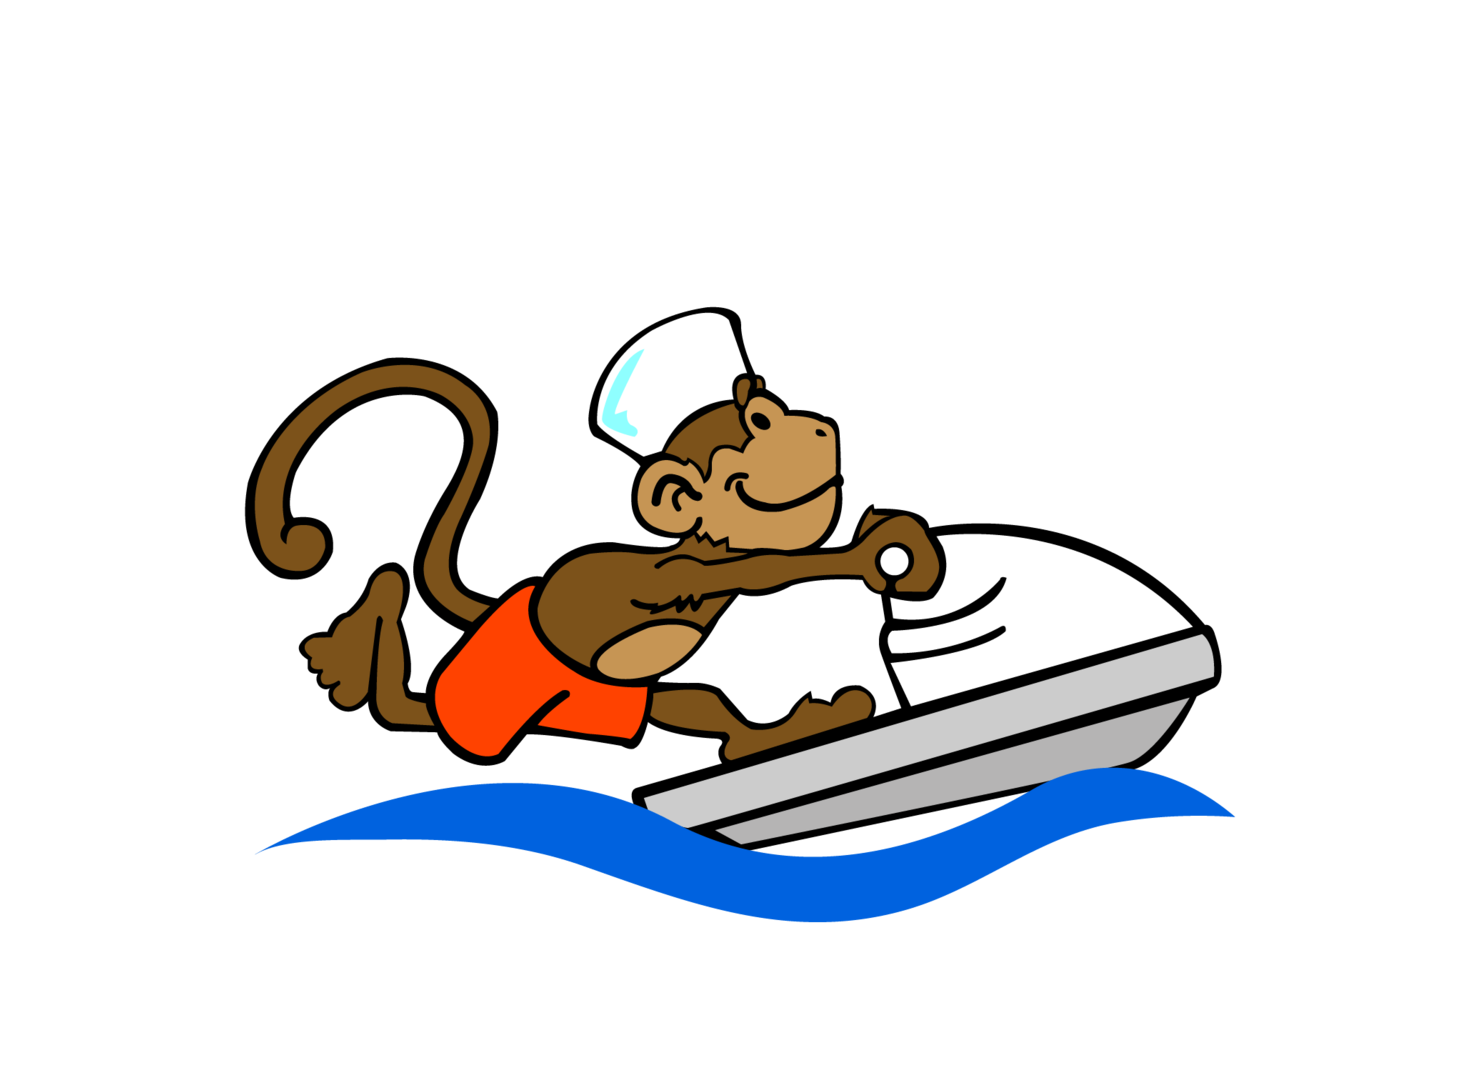 Sea Monkeys Watersports Jetski - Boat Tour (1500x1102)